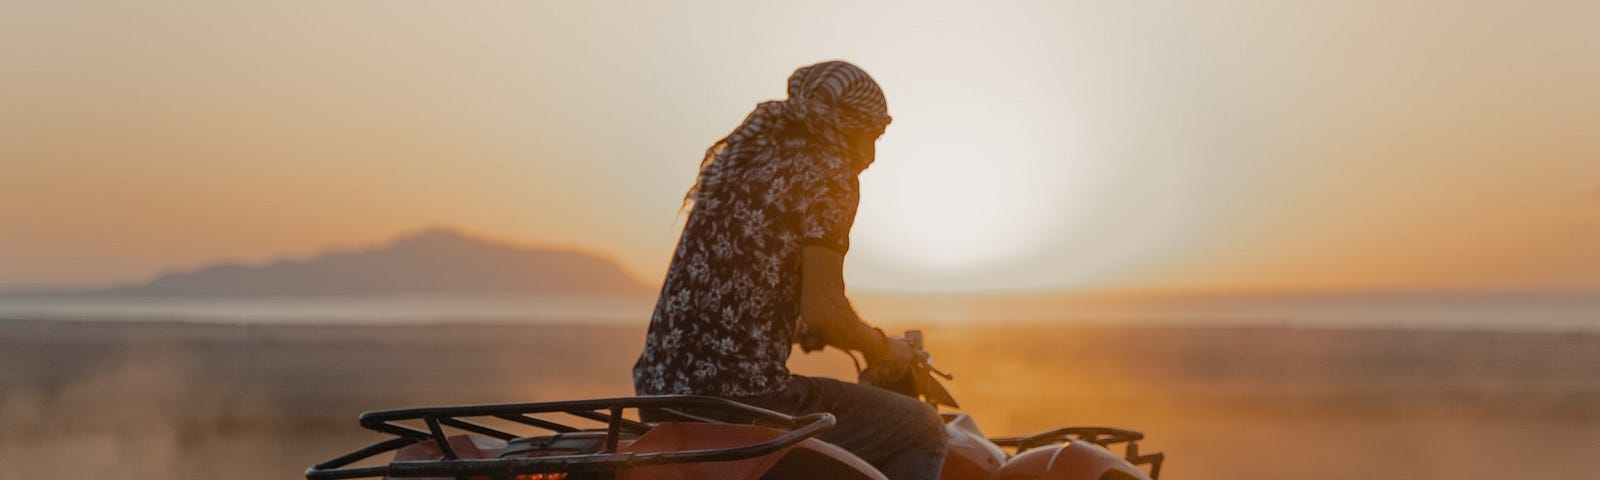 Man riding the ATV on brown sand | Why Most Writers Fail | Why writers fail, how to be a good writer, how to stop quitting, how to keep writing, writing, writing tips, medium, Tijjani Jibril